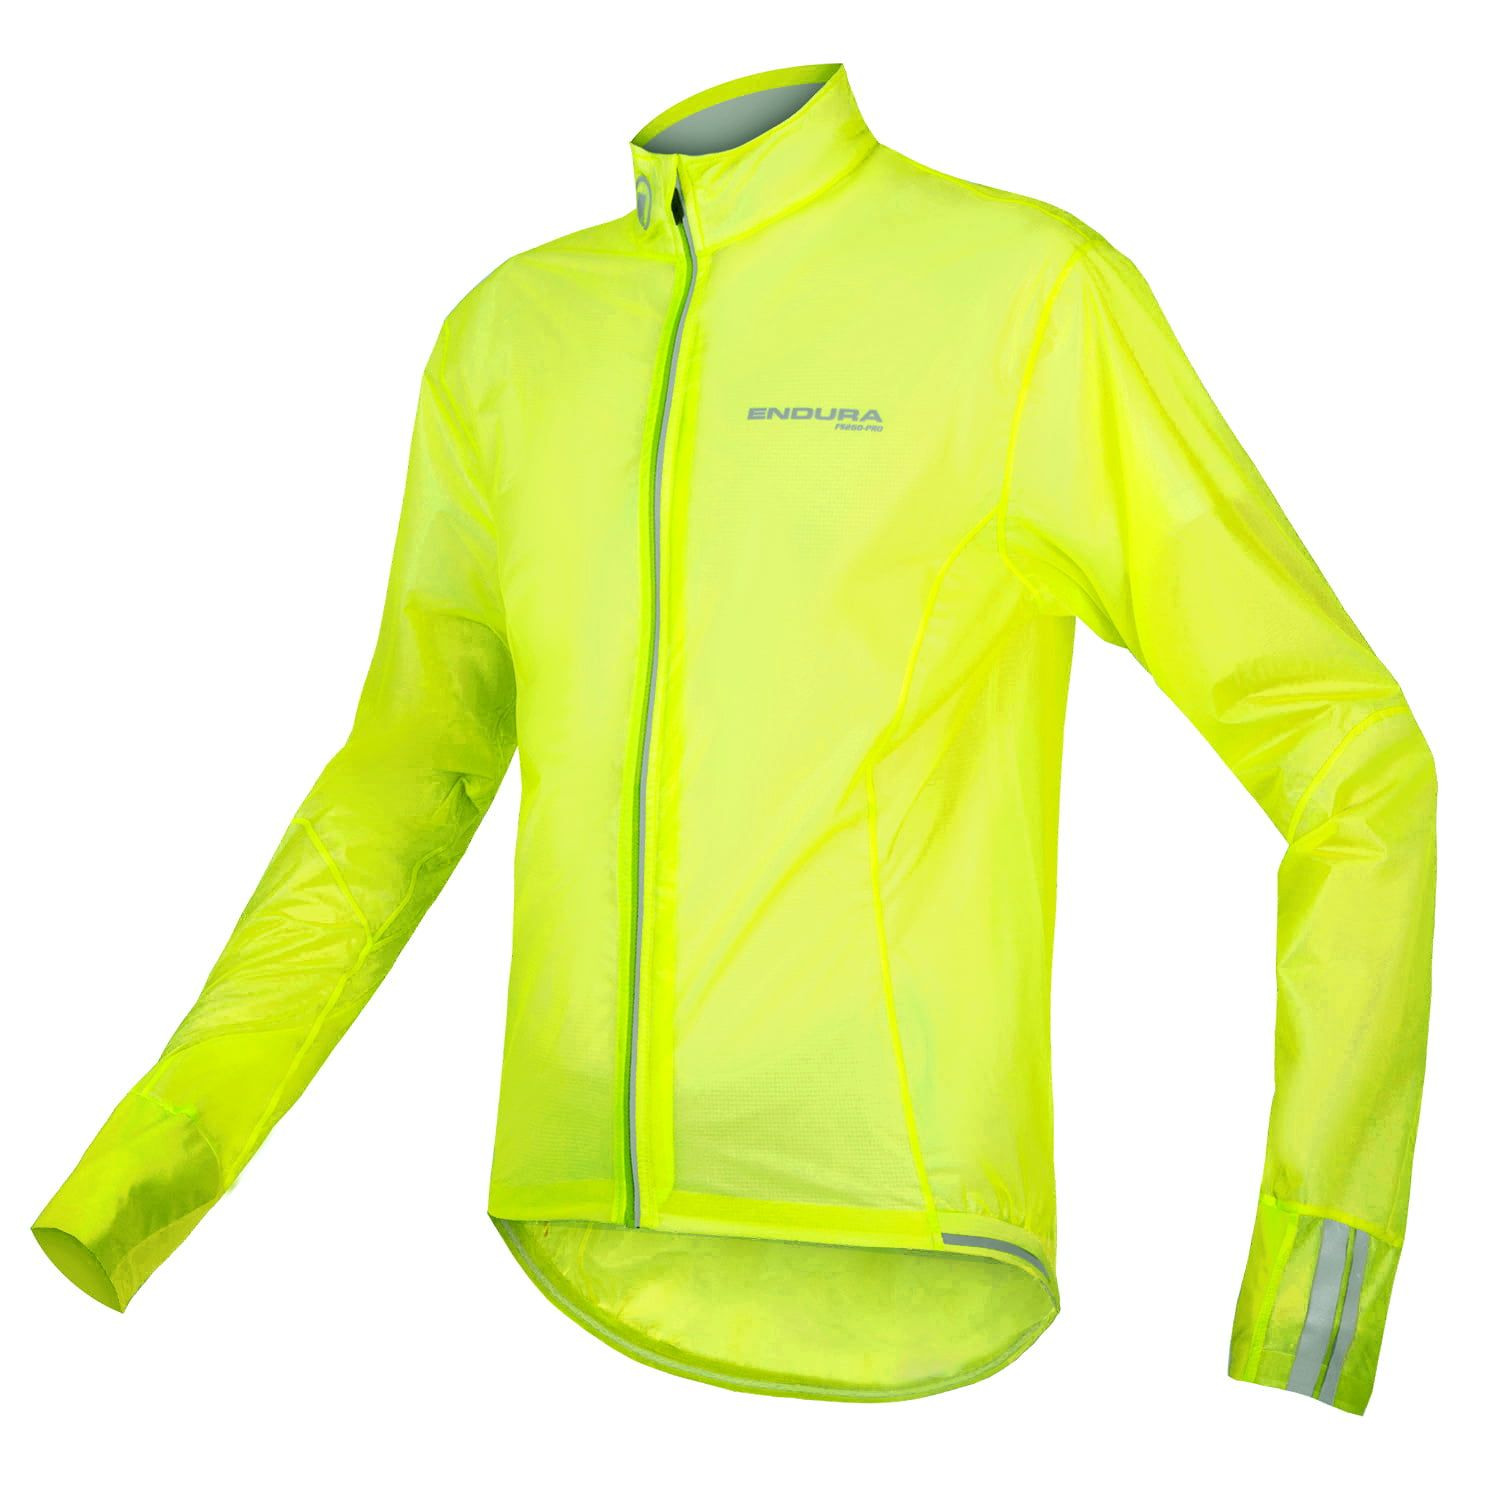 Endura FS260-Pro Adrenaline Race Cape II Herren Regenjacke neon,neon gelb Gr. M*